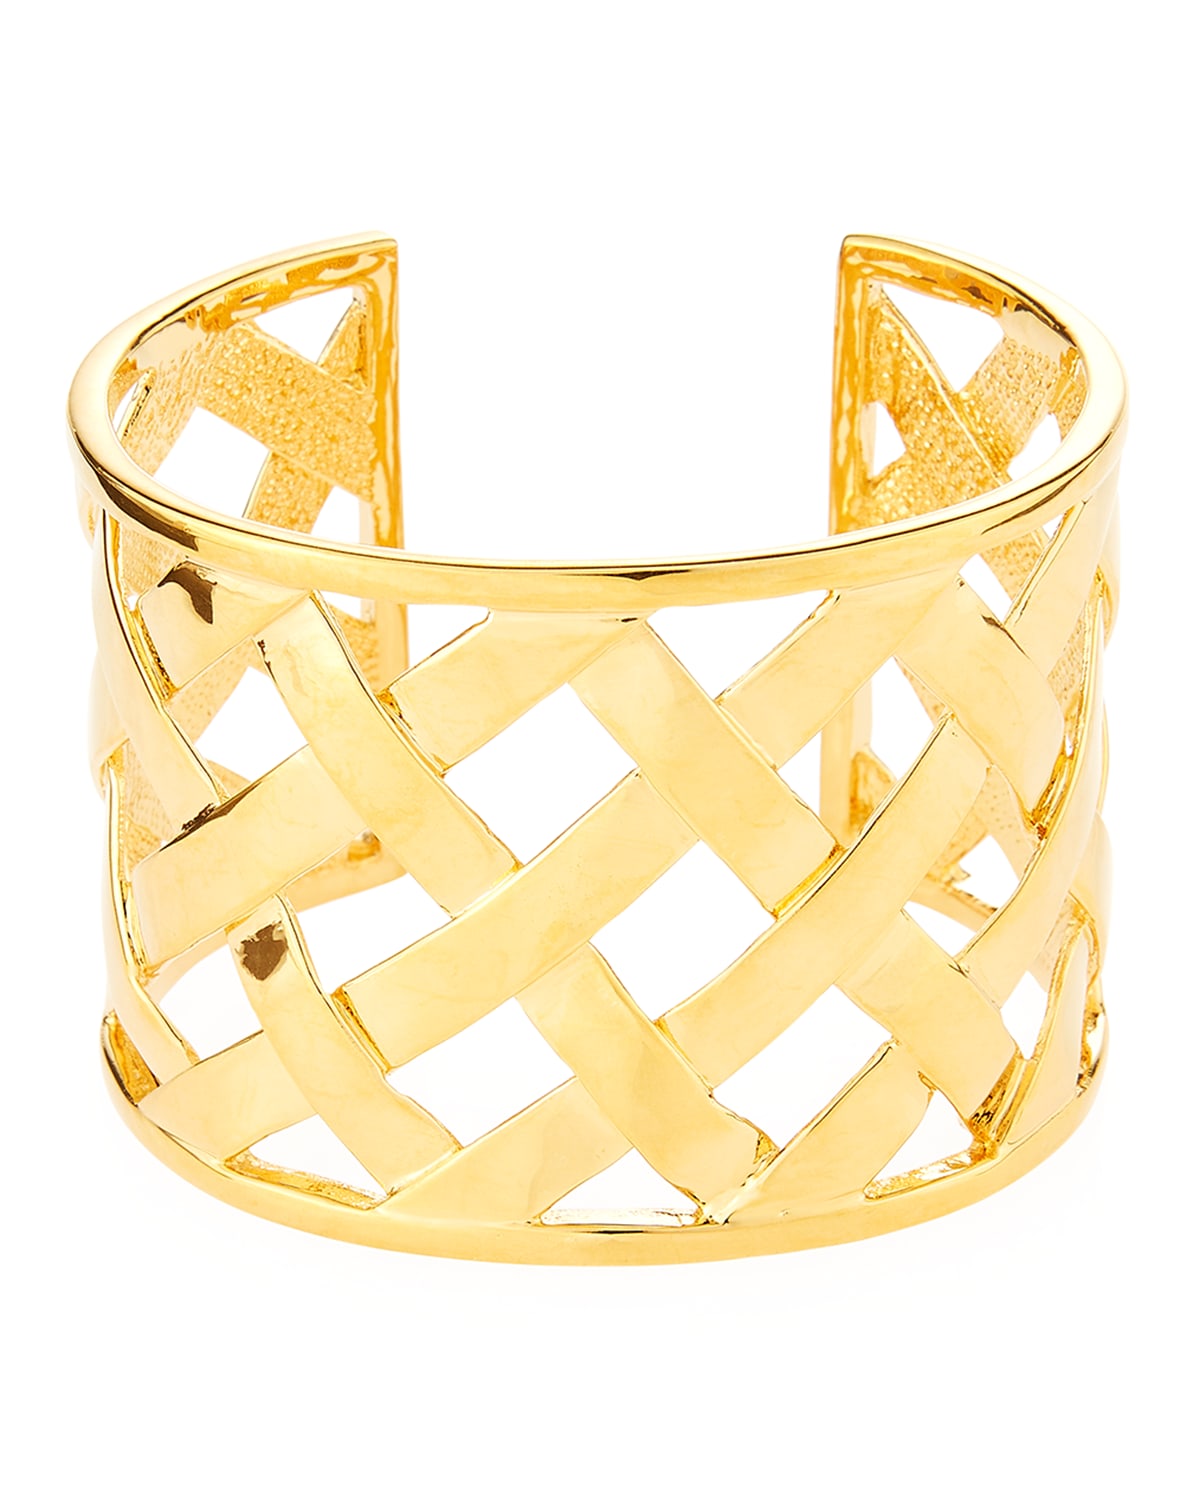 Kenneth Jay Lane 22K Hammered Gold Cuff Bracelet | Neiman Marcus